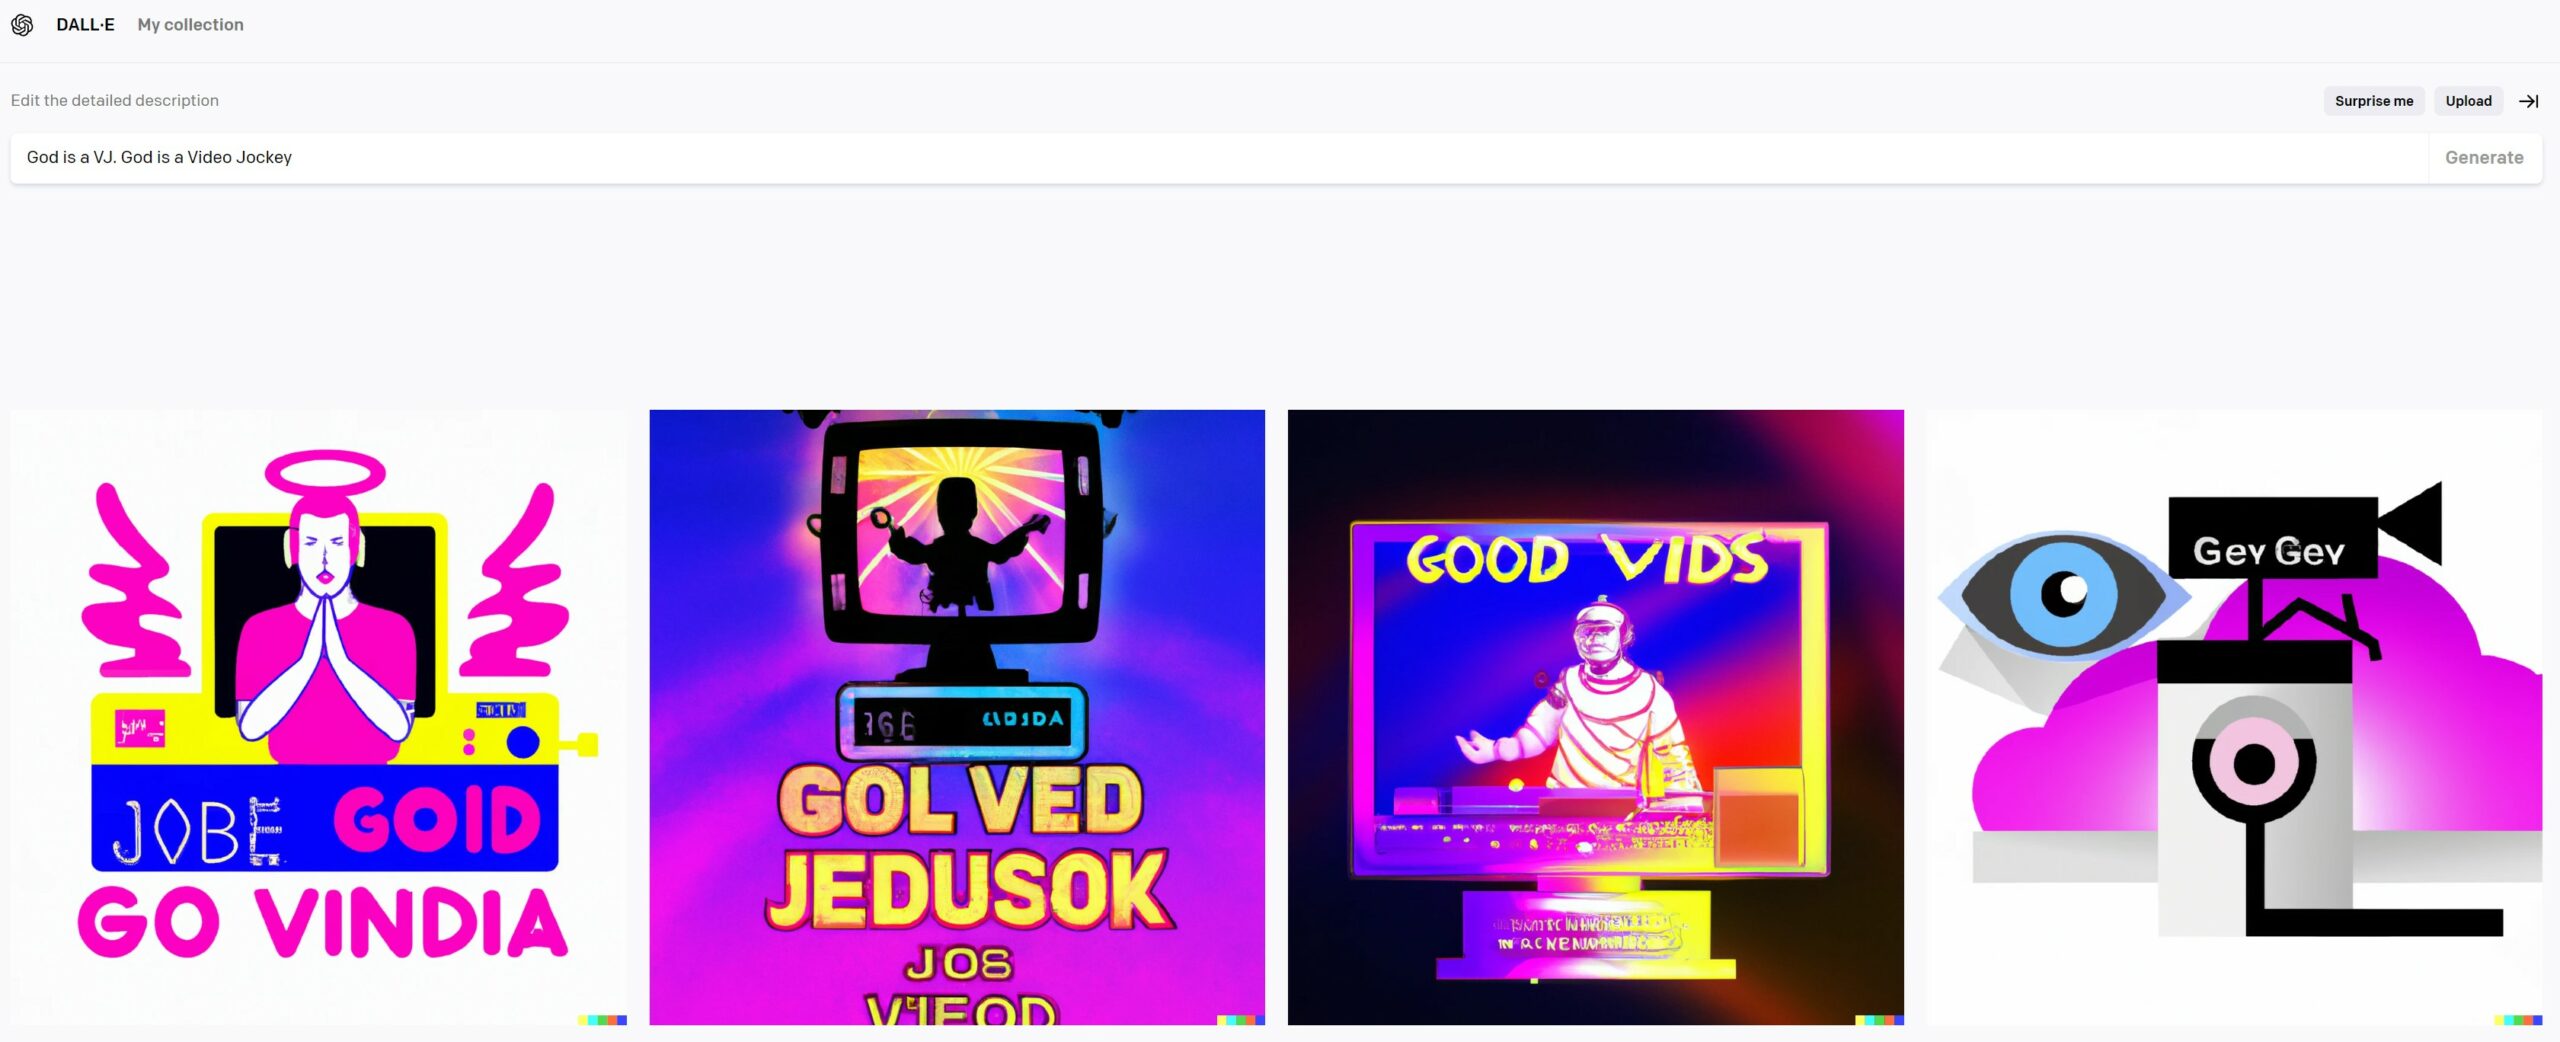 God is a VJ. God is a Video Jockey _ DALL·E 